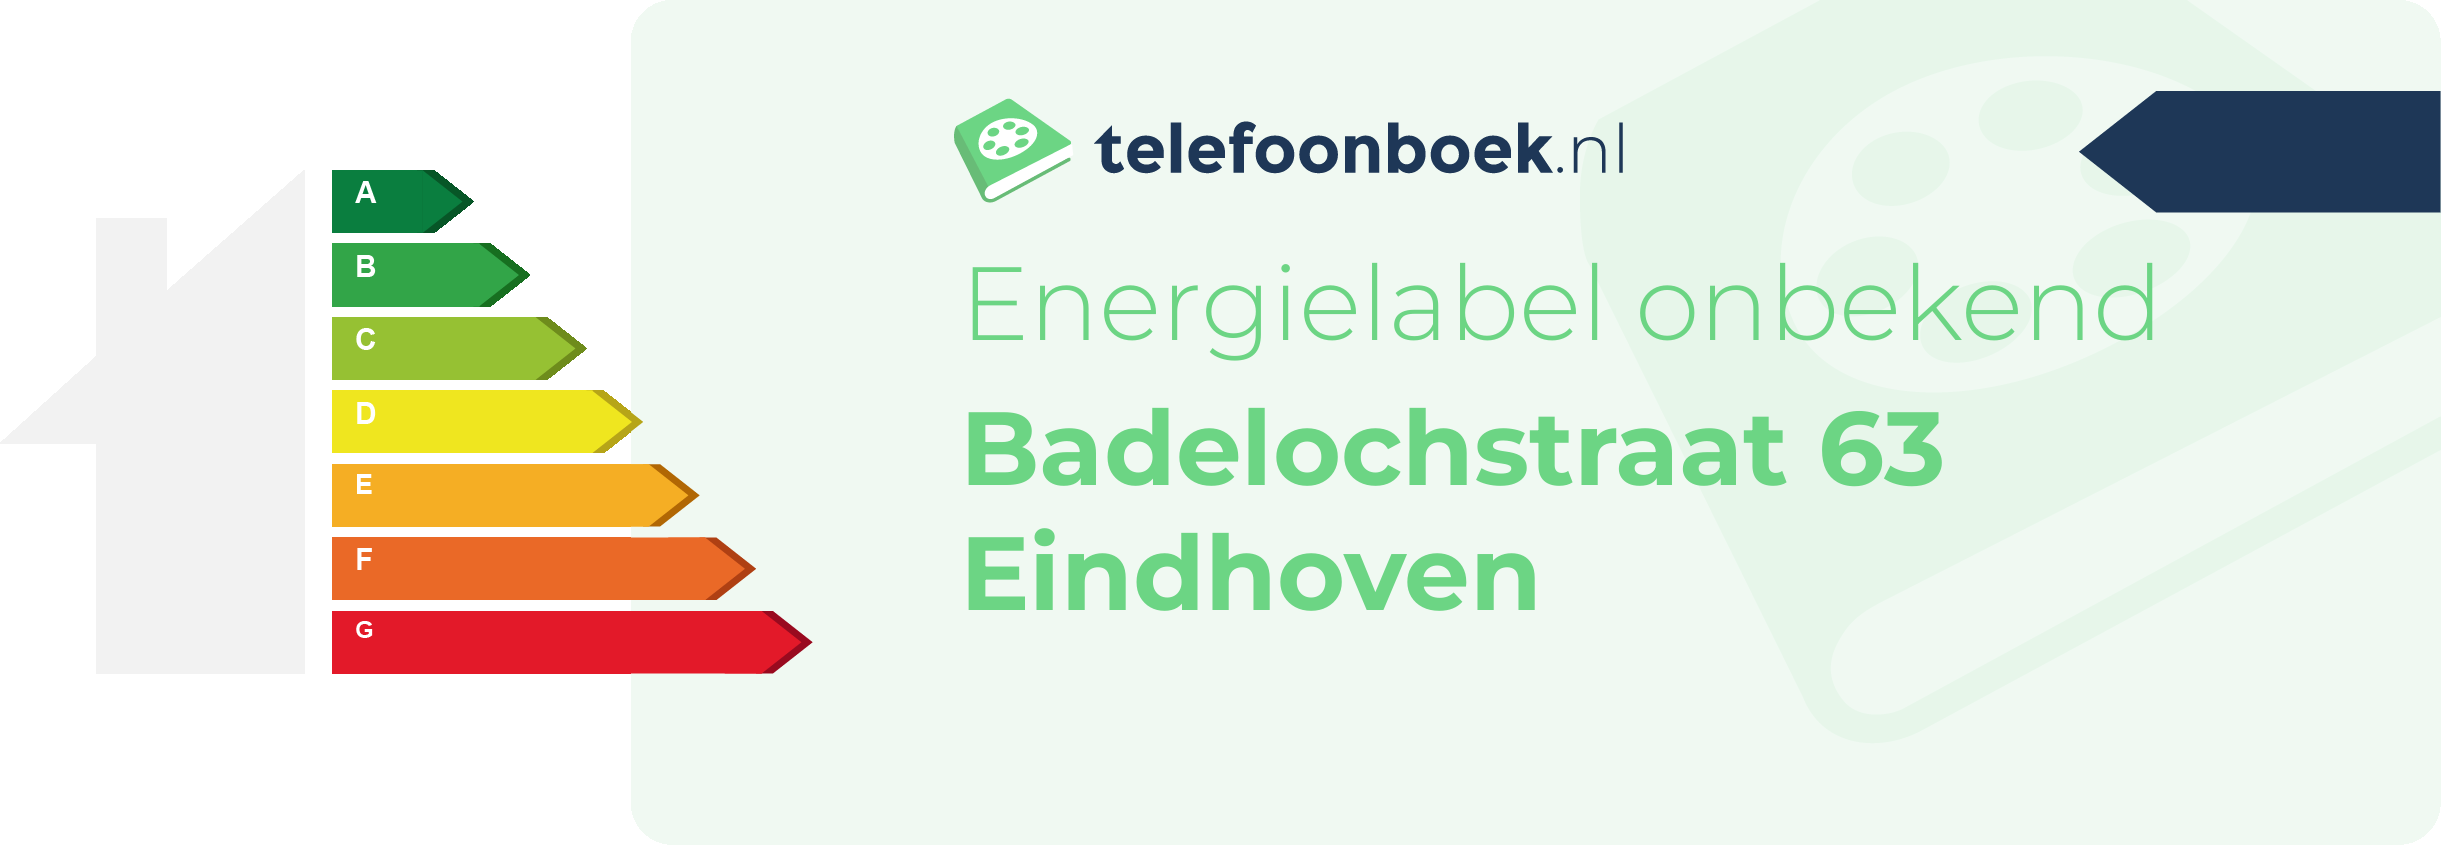 Energielabel Badelochstraat 63 Eindhoven